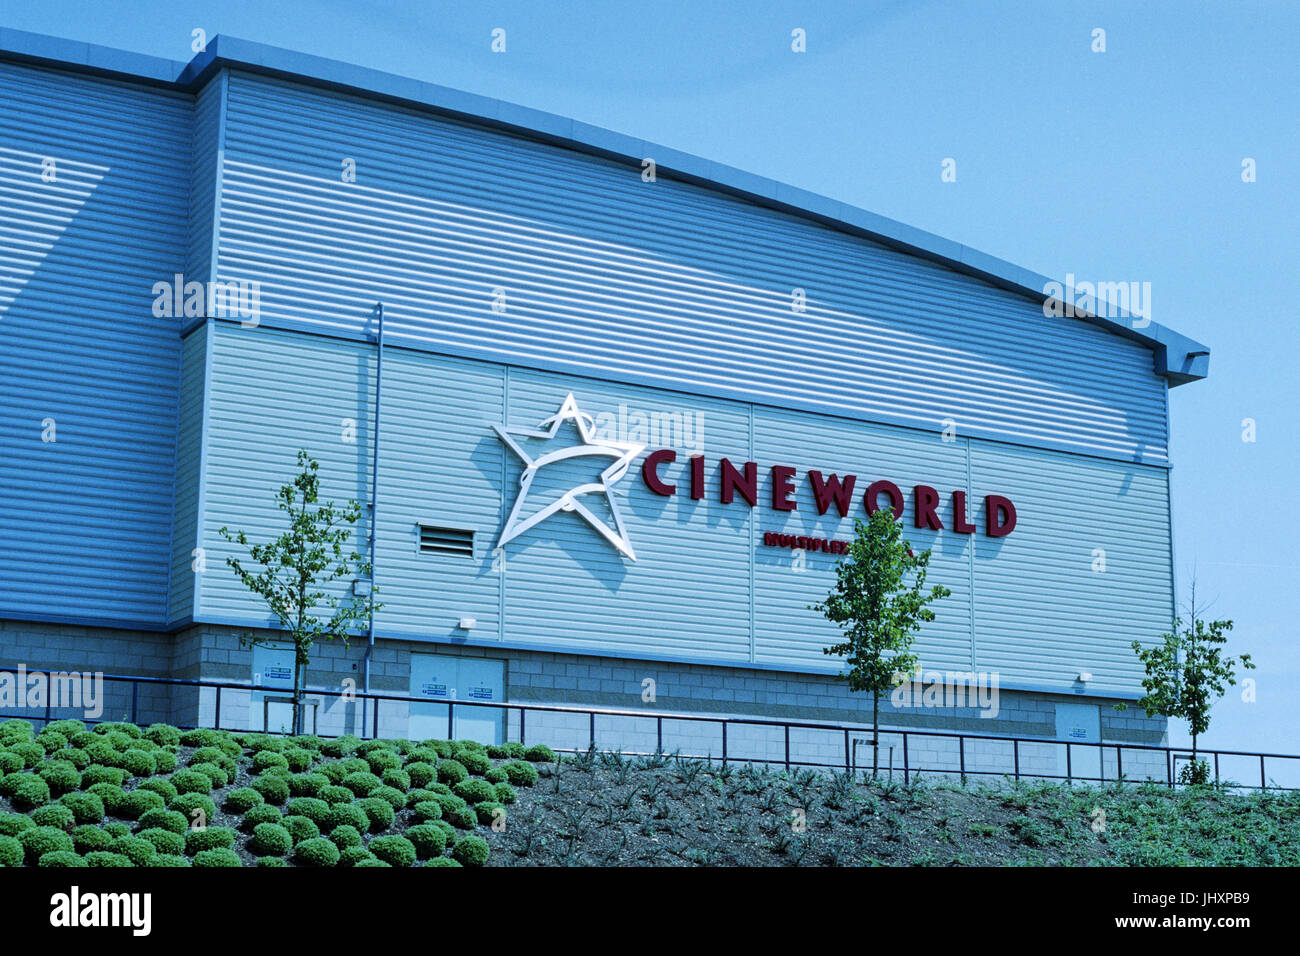 Cineworld Cinema - Freeport Leisure, Charter Way, Braintree, Essex Foto Stock